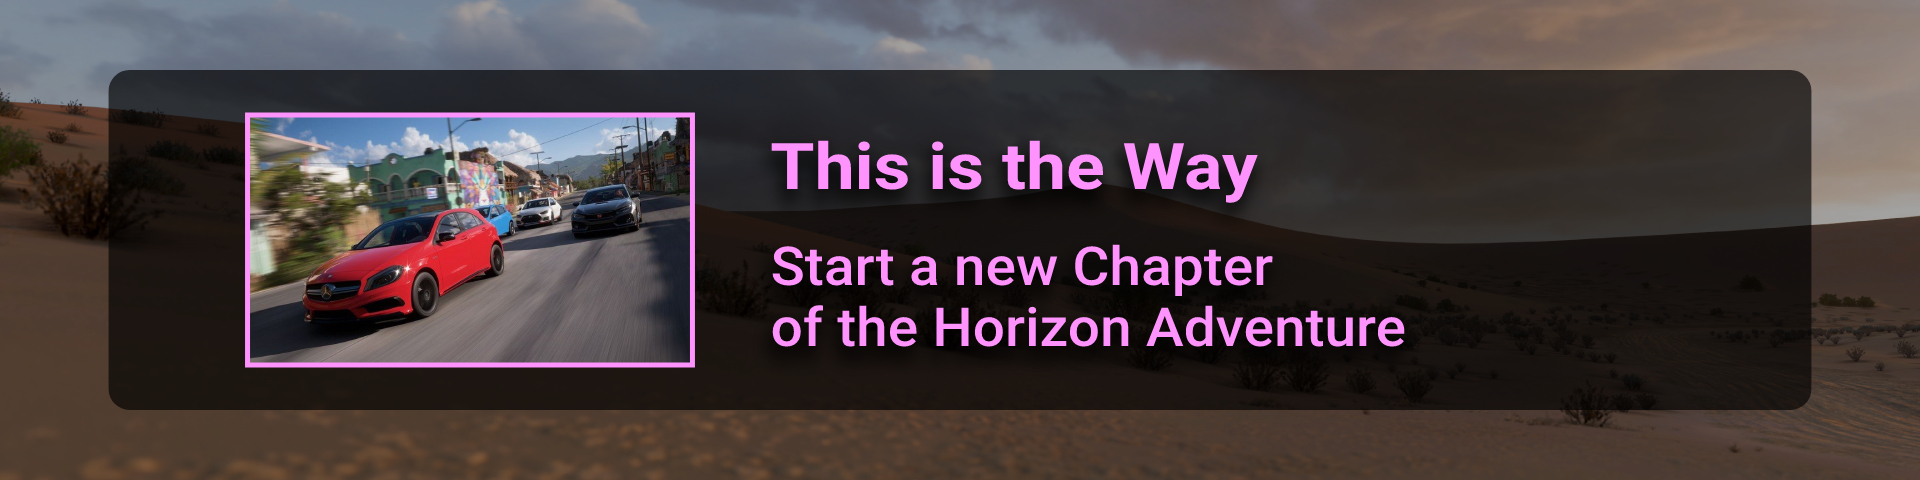 Forza Horizon Achievement Guide & Road Map